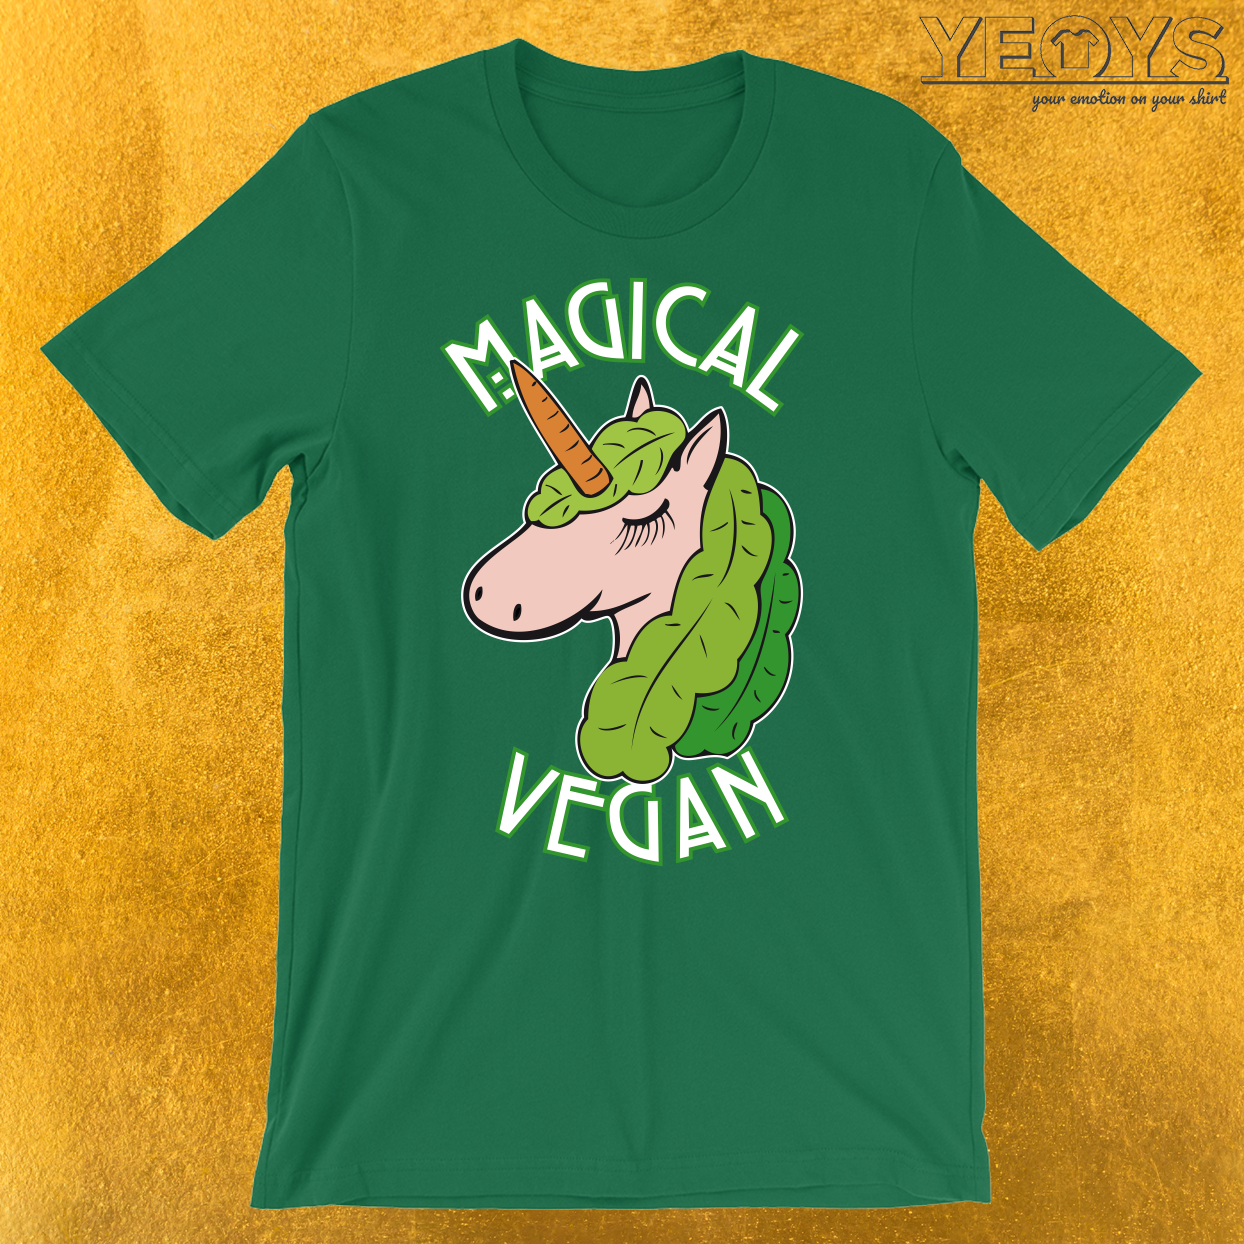 Magical Vegan T-Shirt